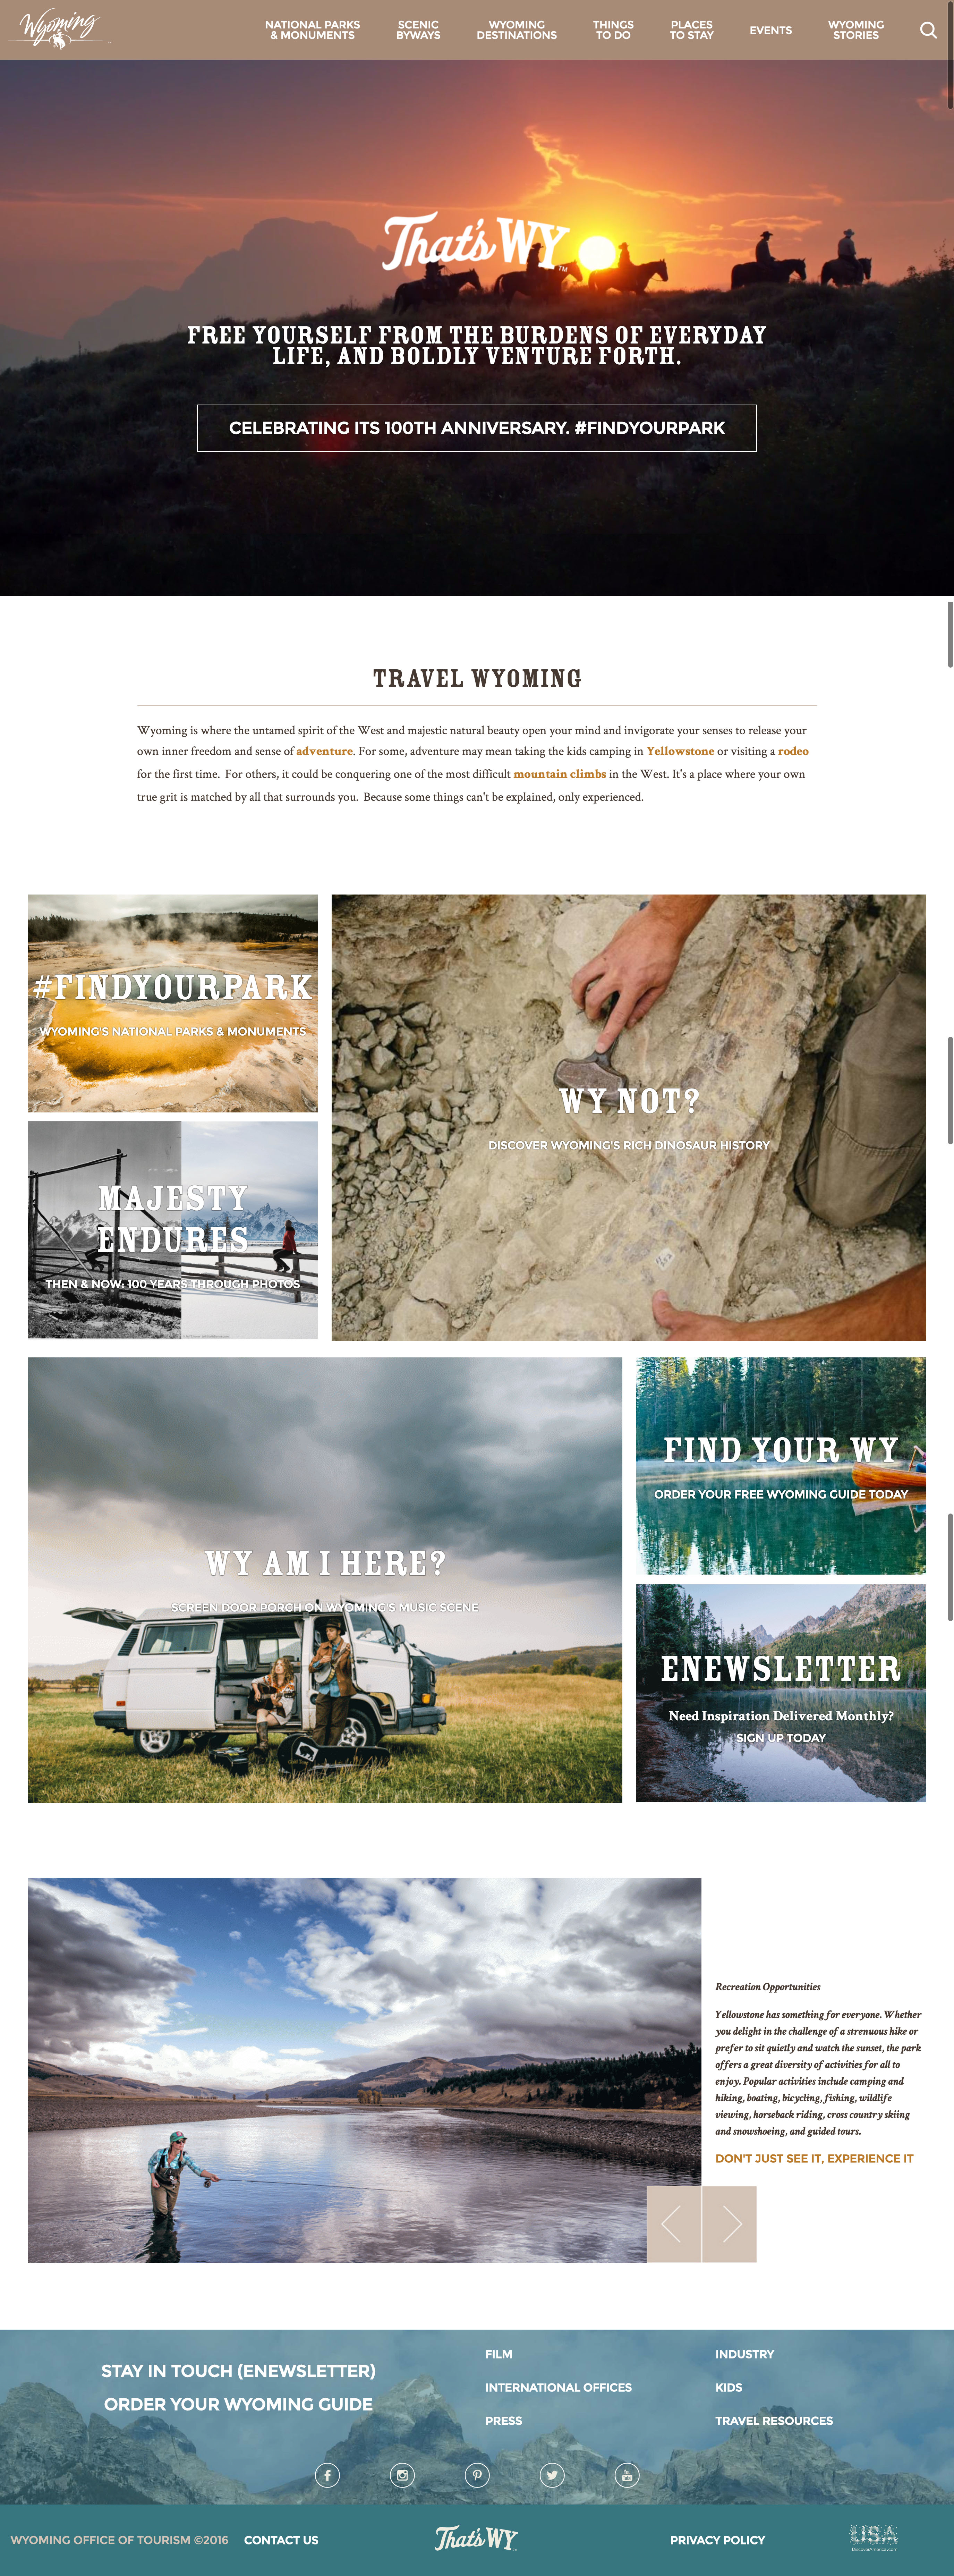 Wyoming Tourism Website Redesign image